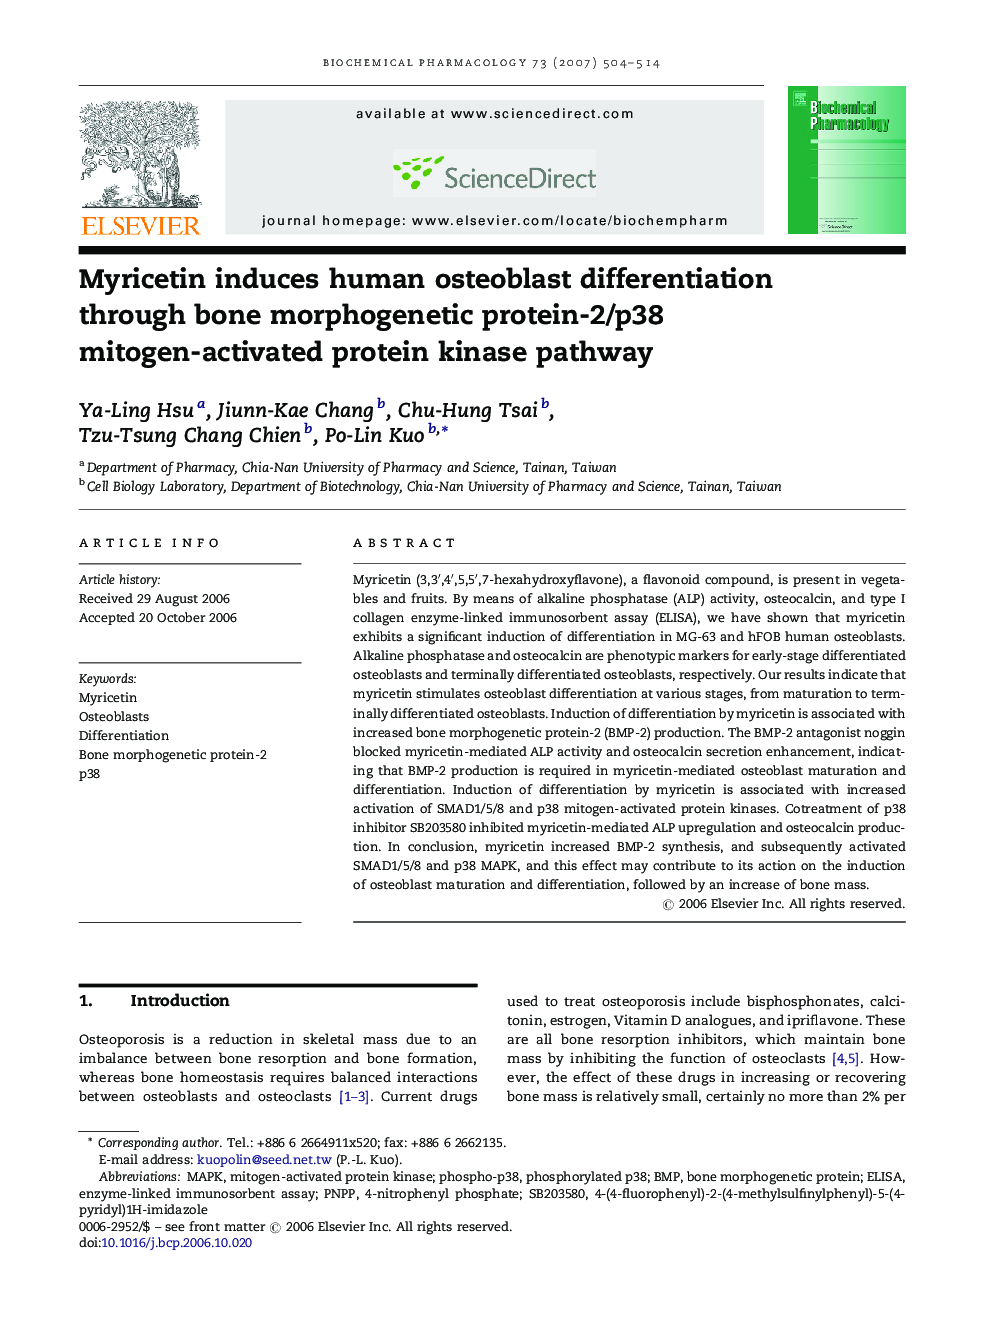 Myricetin induces human osteoblast differentiation through bone morphogenetic protein-2/p38 mitogen-activated protein kinase pathway